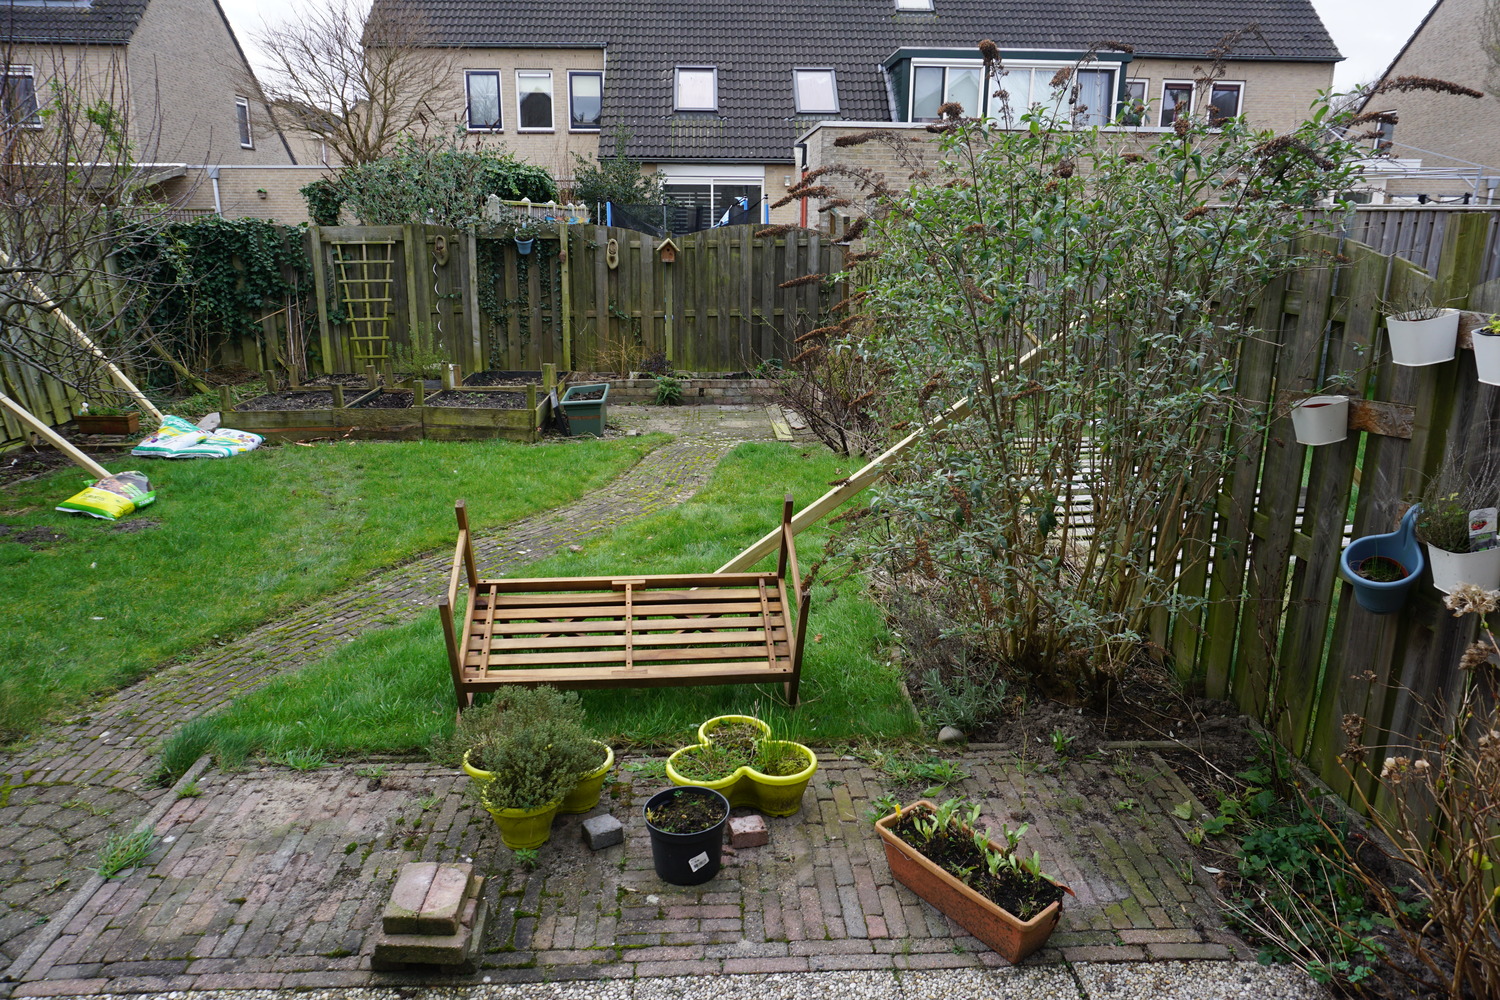 Garden overview with fallen over bench